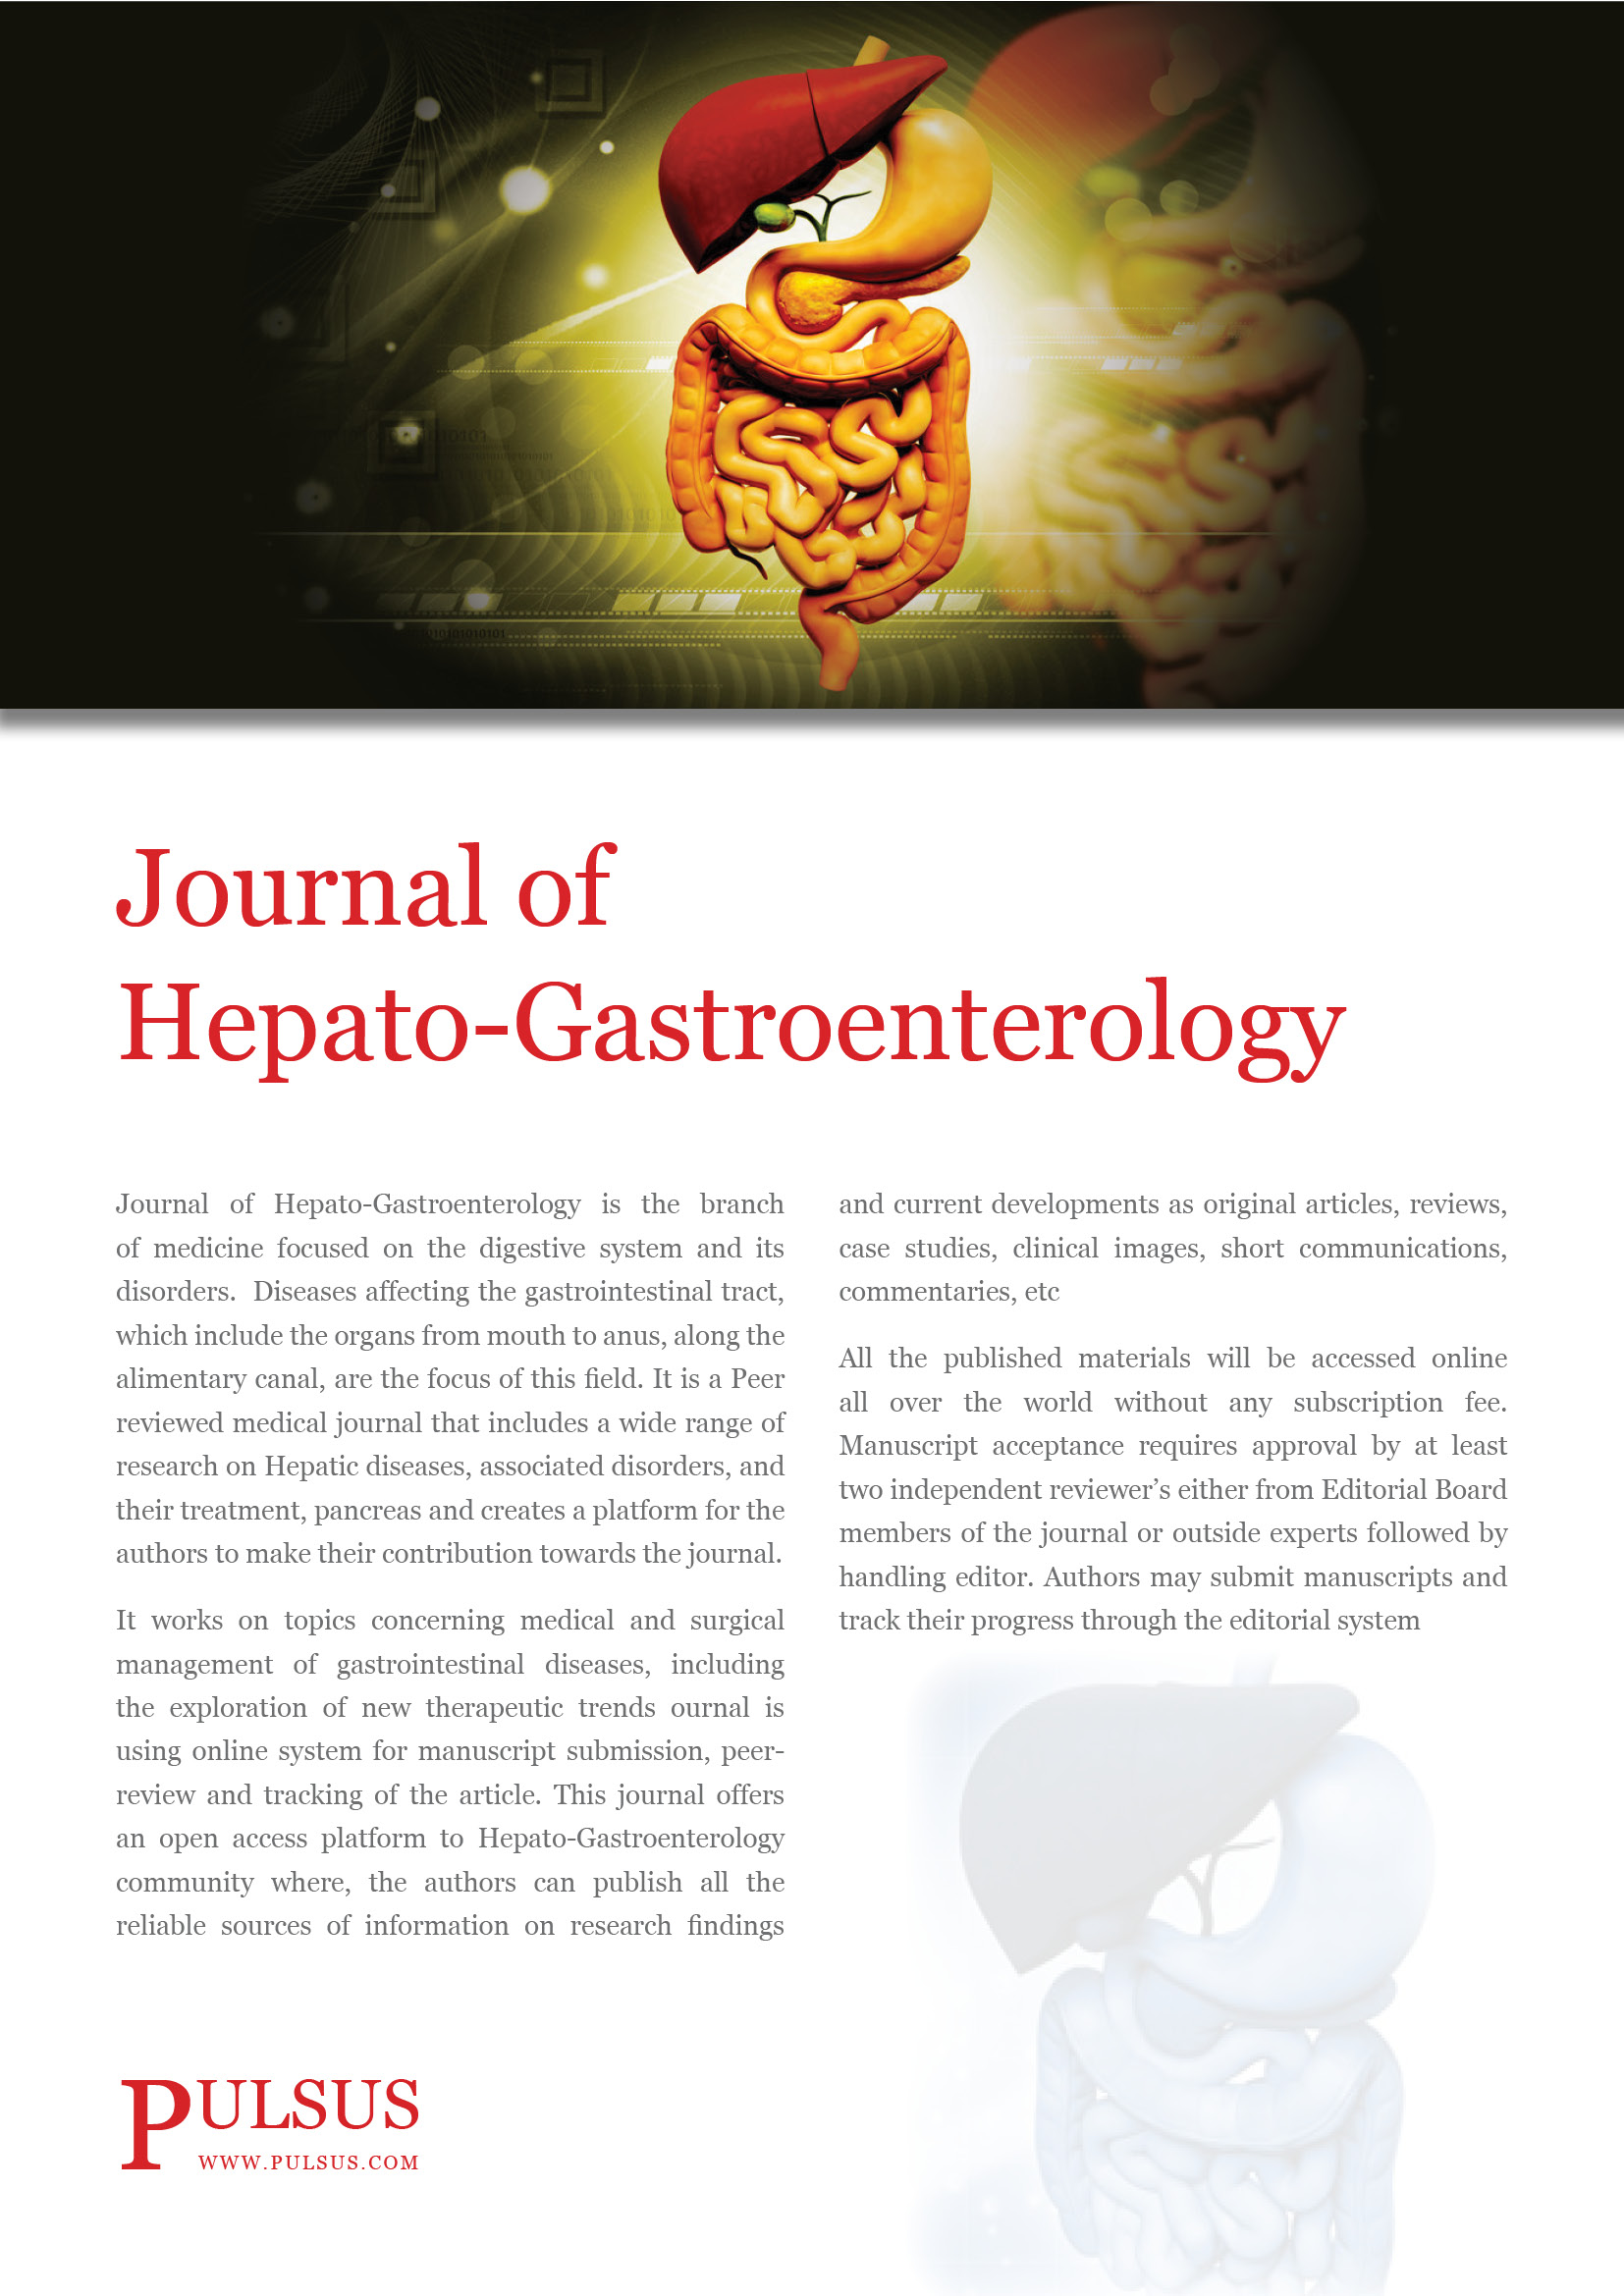 Journal of Hepato-Gastroenterology